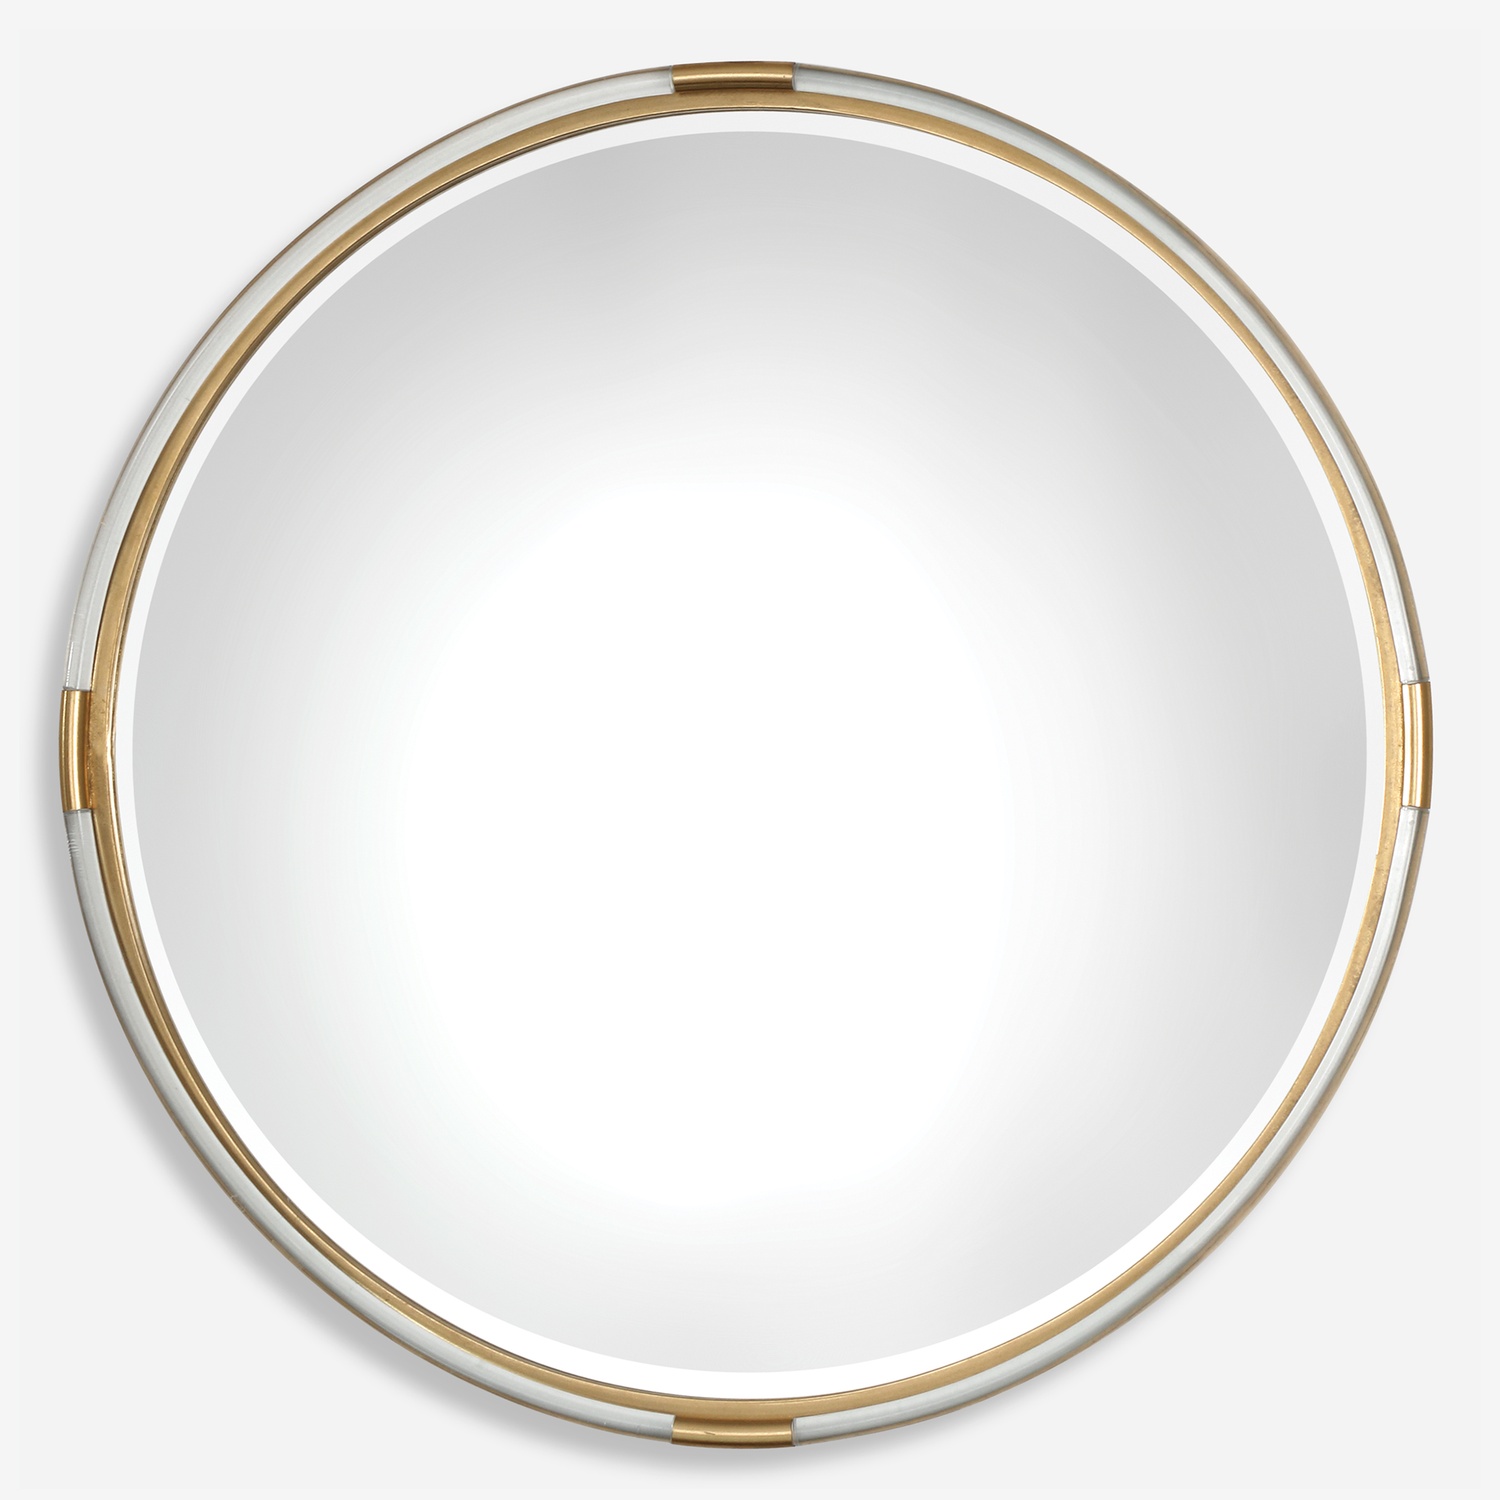 Mackai-Round Gold Mirror